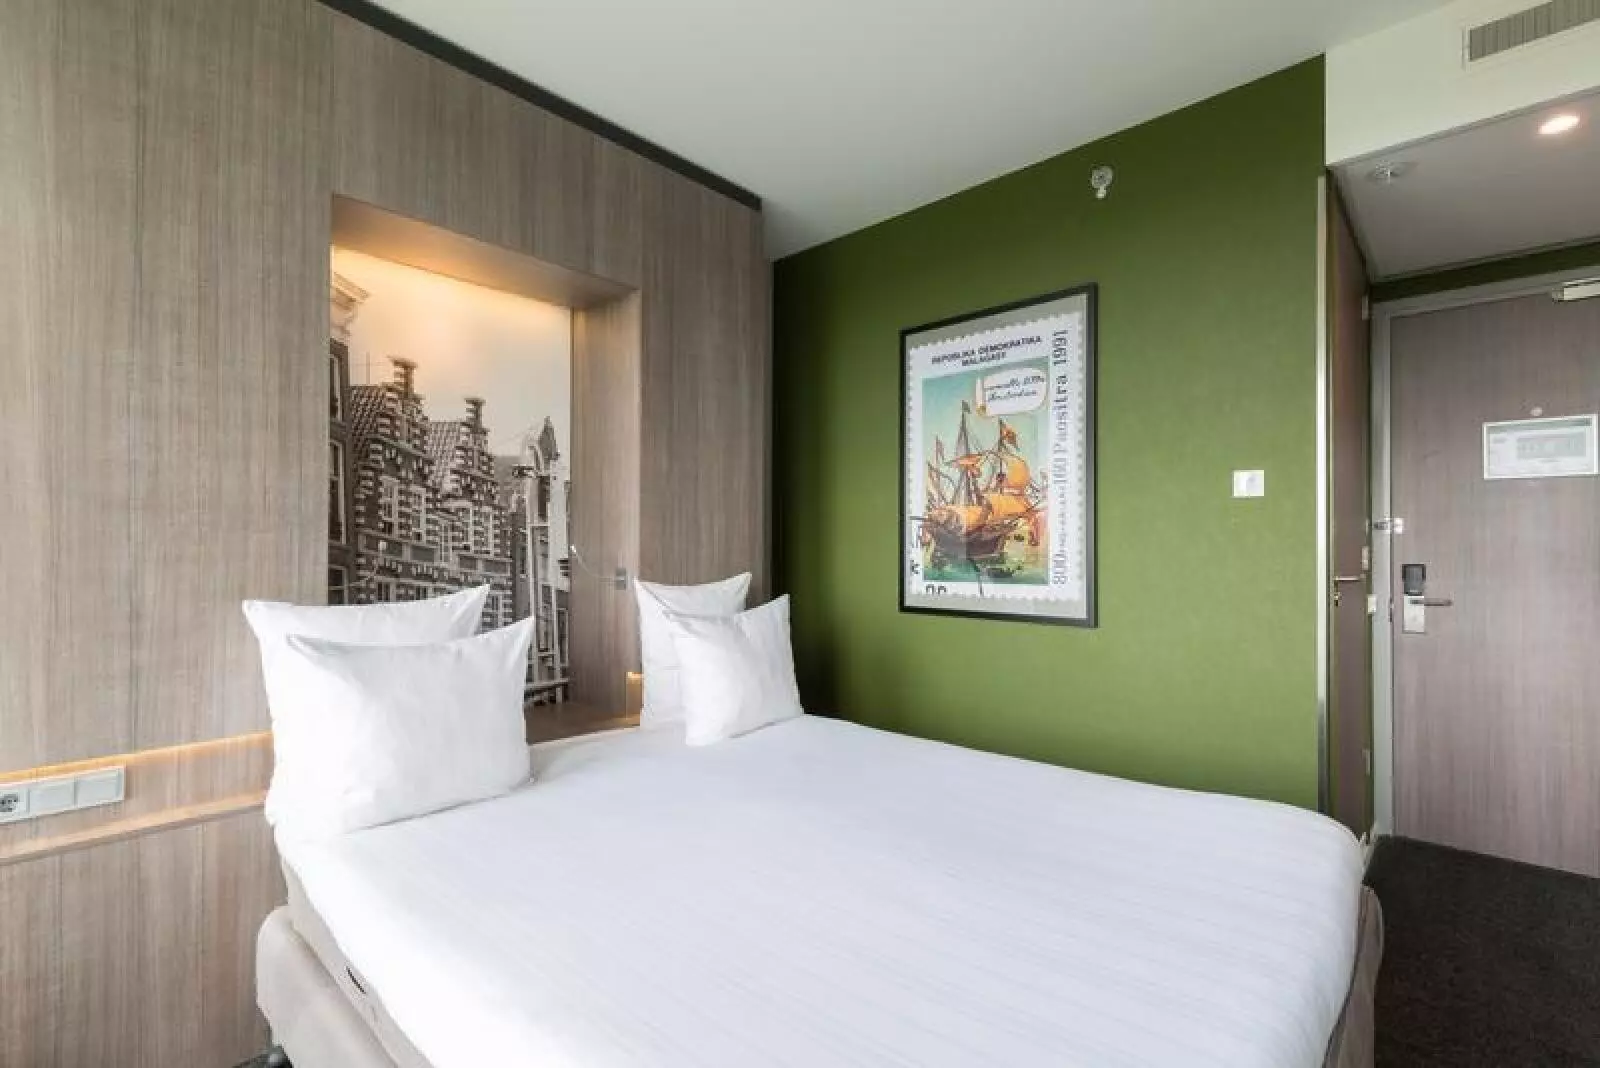 Leonardo Hotel Amsterdam Rembrandtpark - Deluxe Queen room with city view